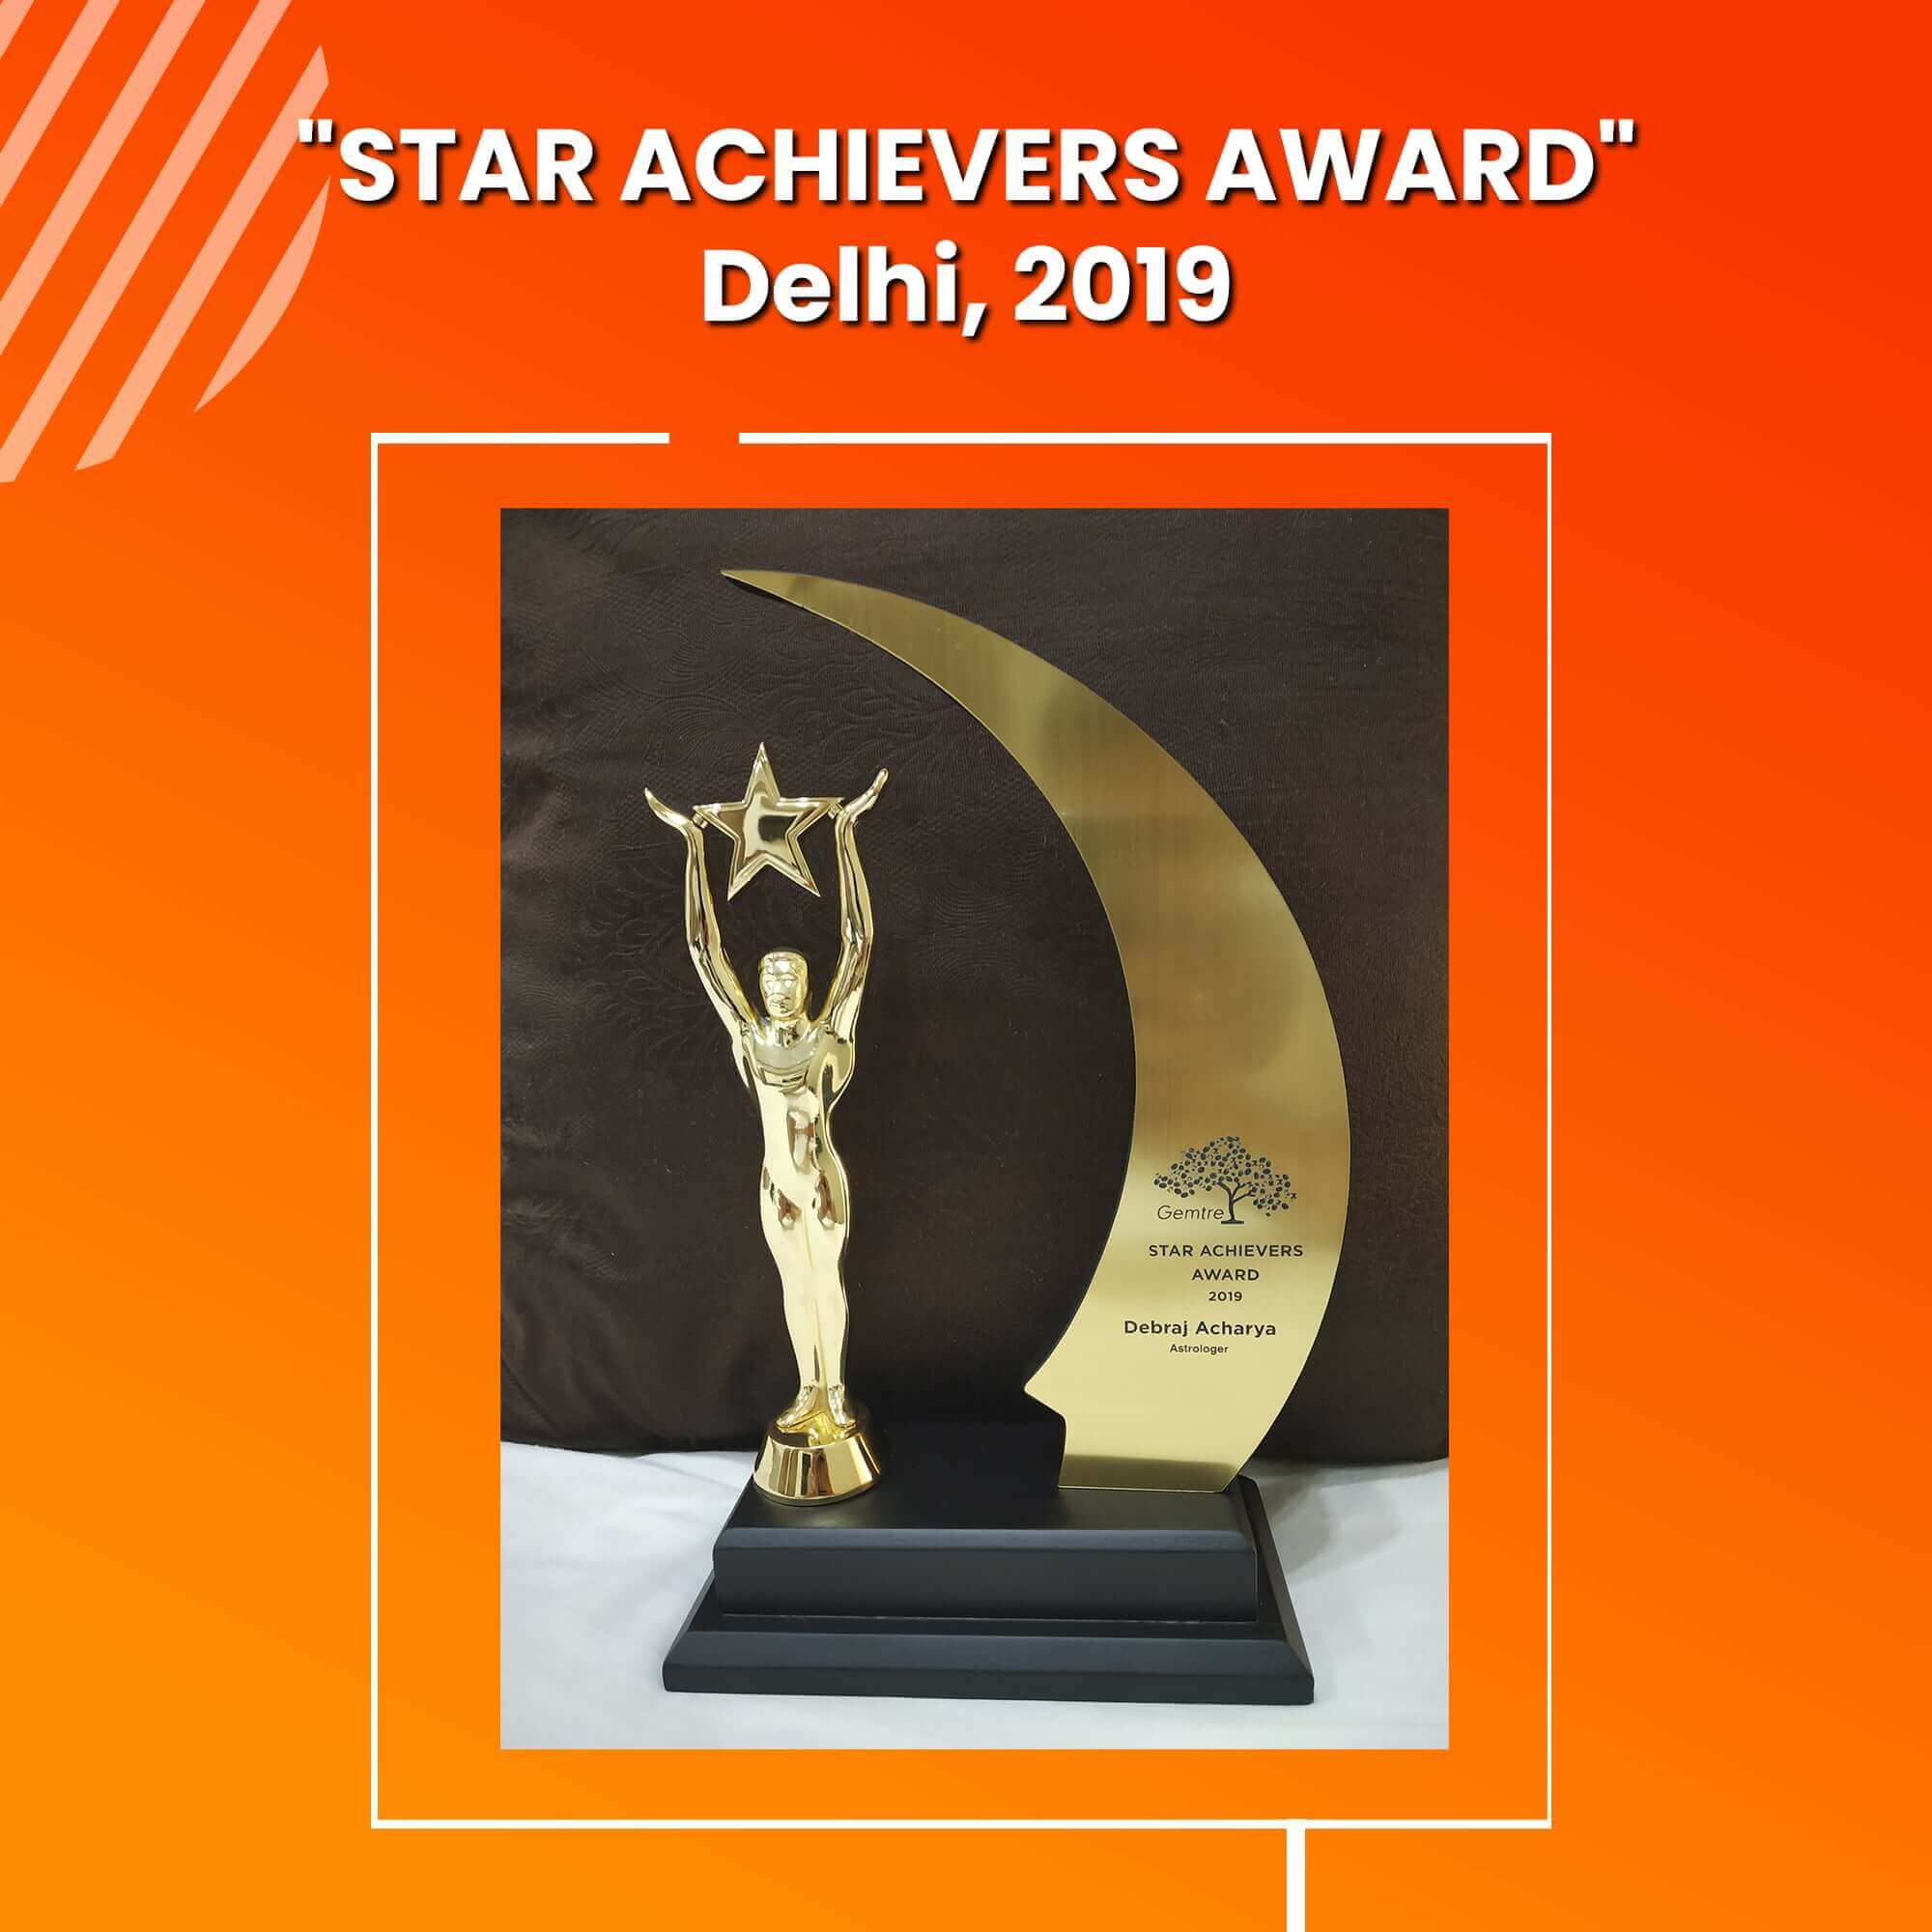 Star Achievers Award received by best Astrologer Debraj Acharya practice in Kolkata, Mumbai, Delhi, Bangalore